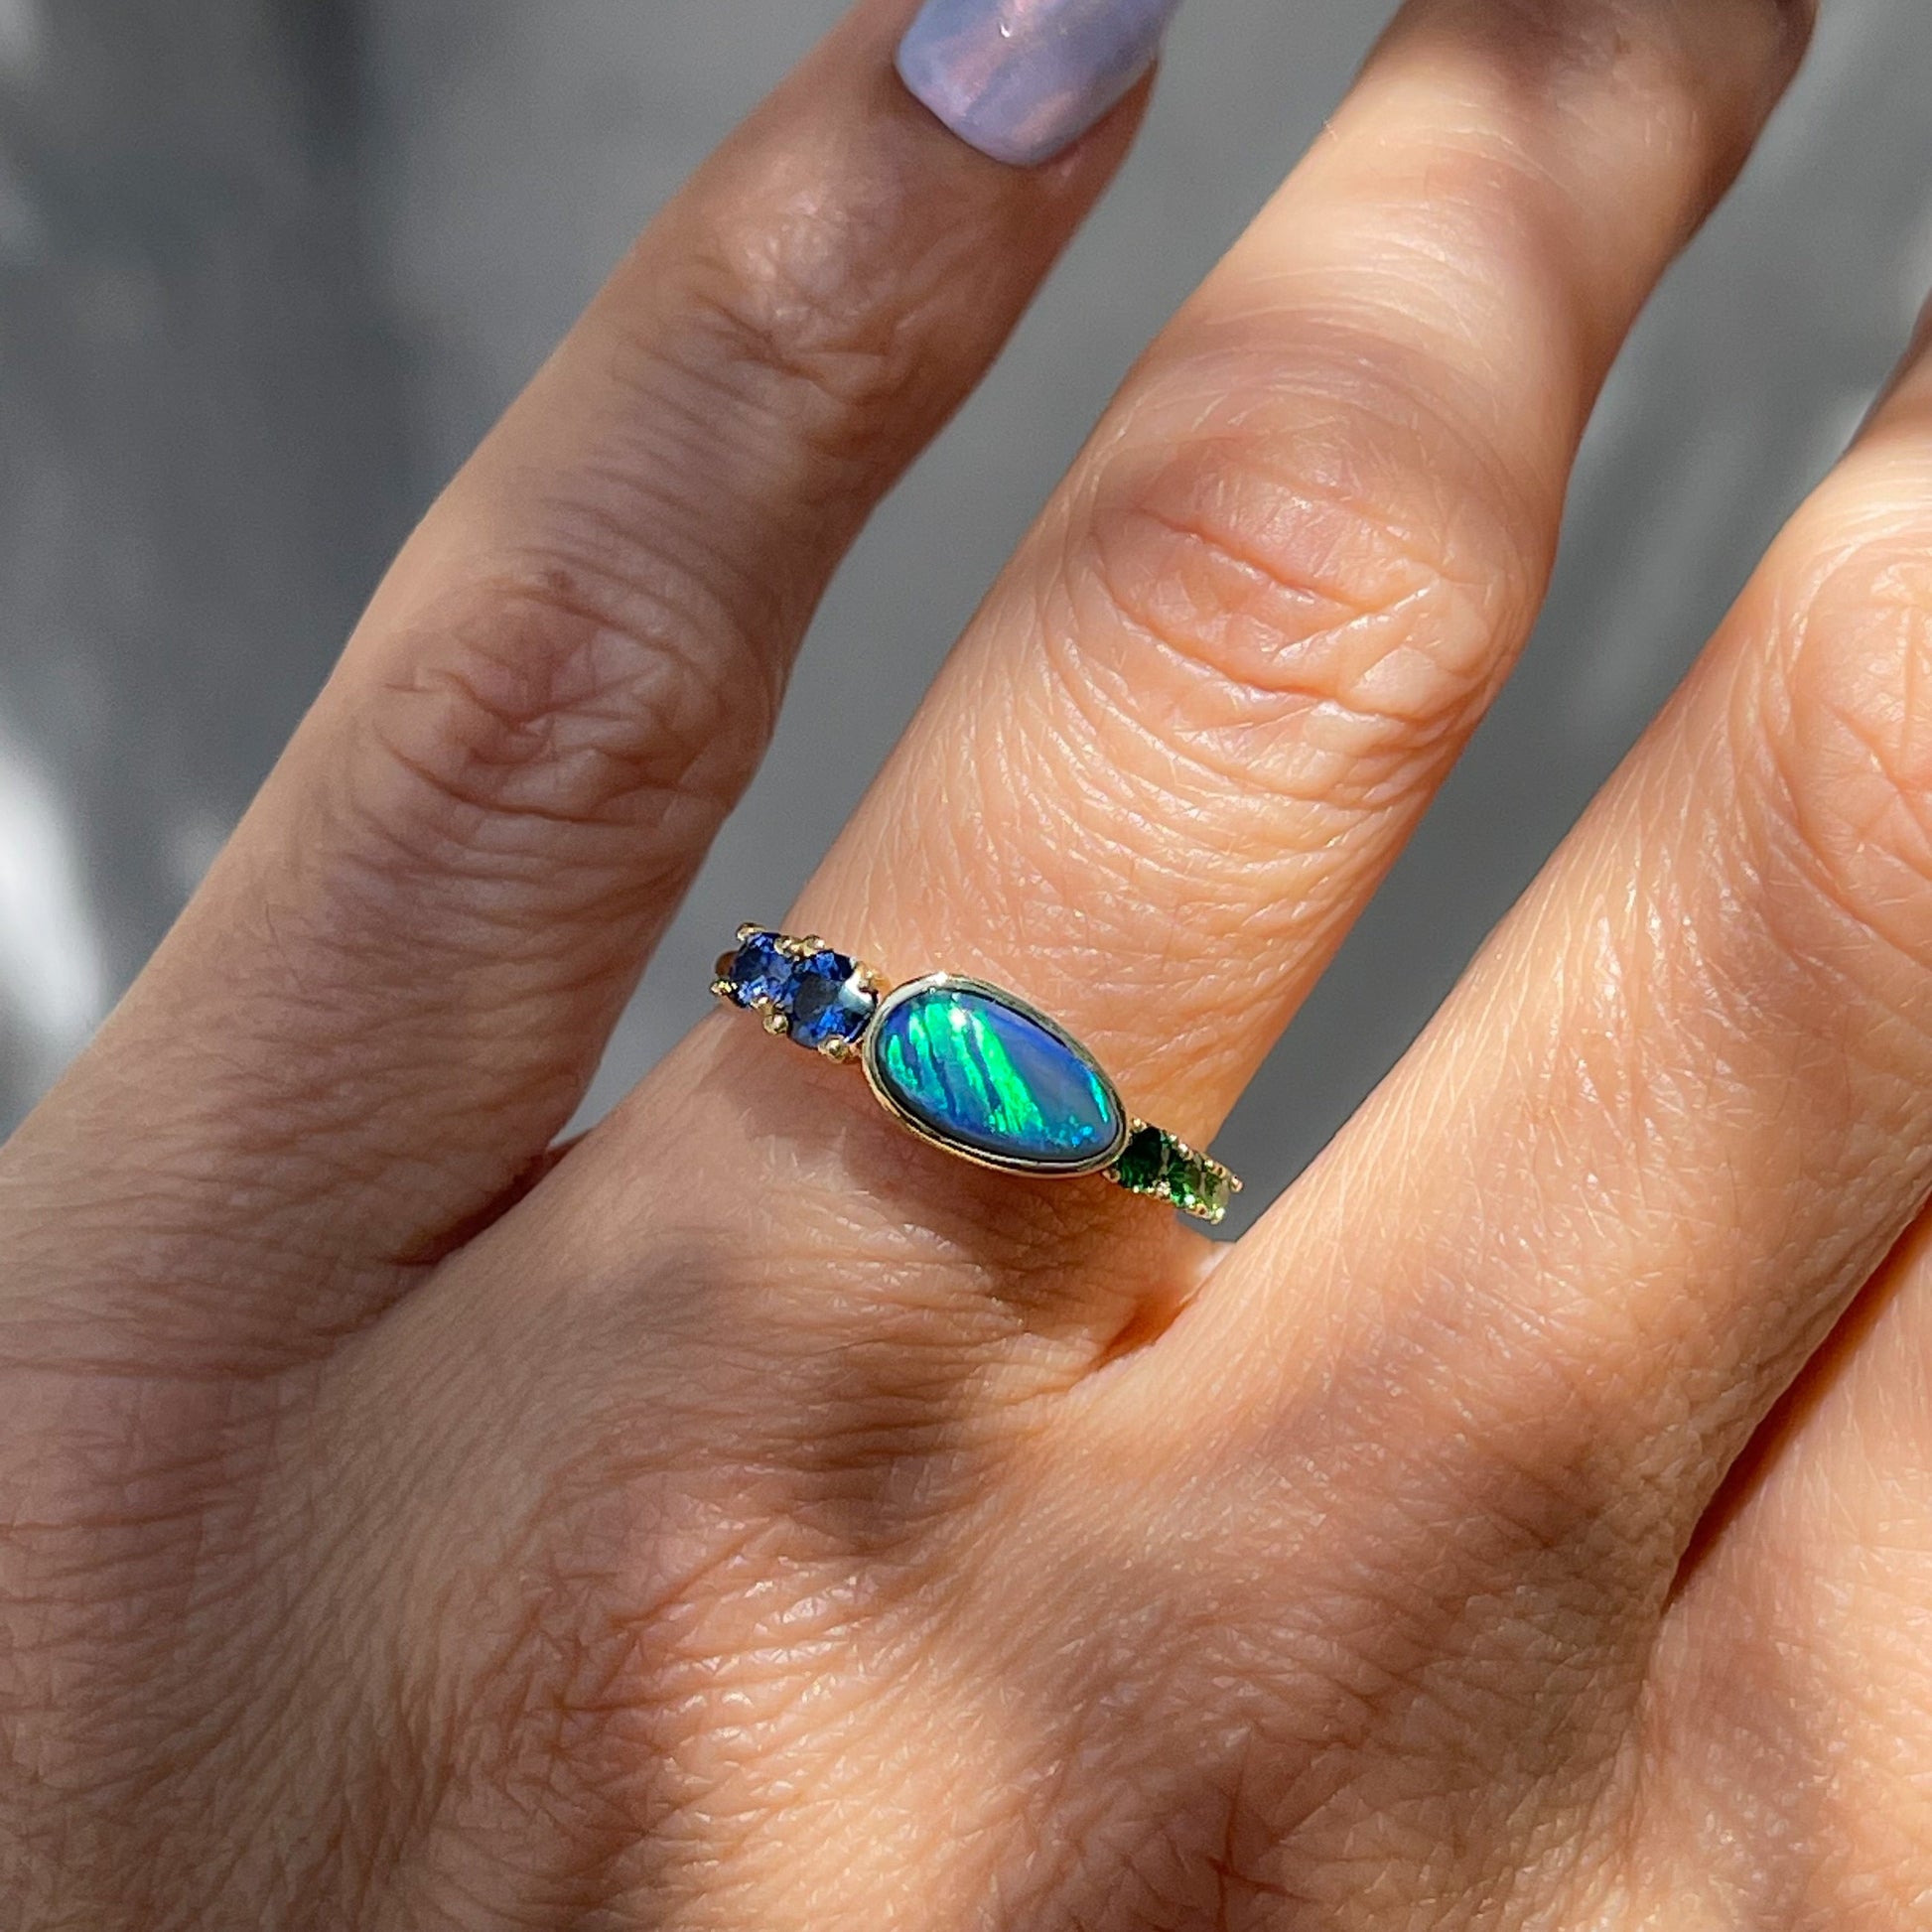 Black Opal Ring by NIXIN Jewelry modeled on hand. Australian opal ring.